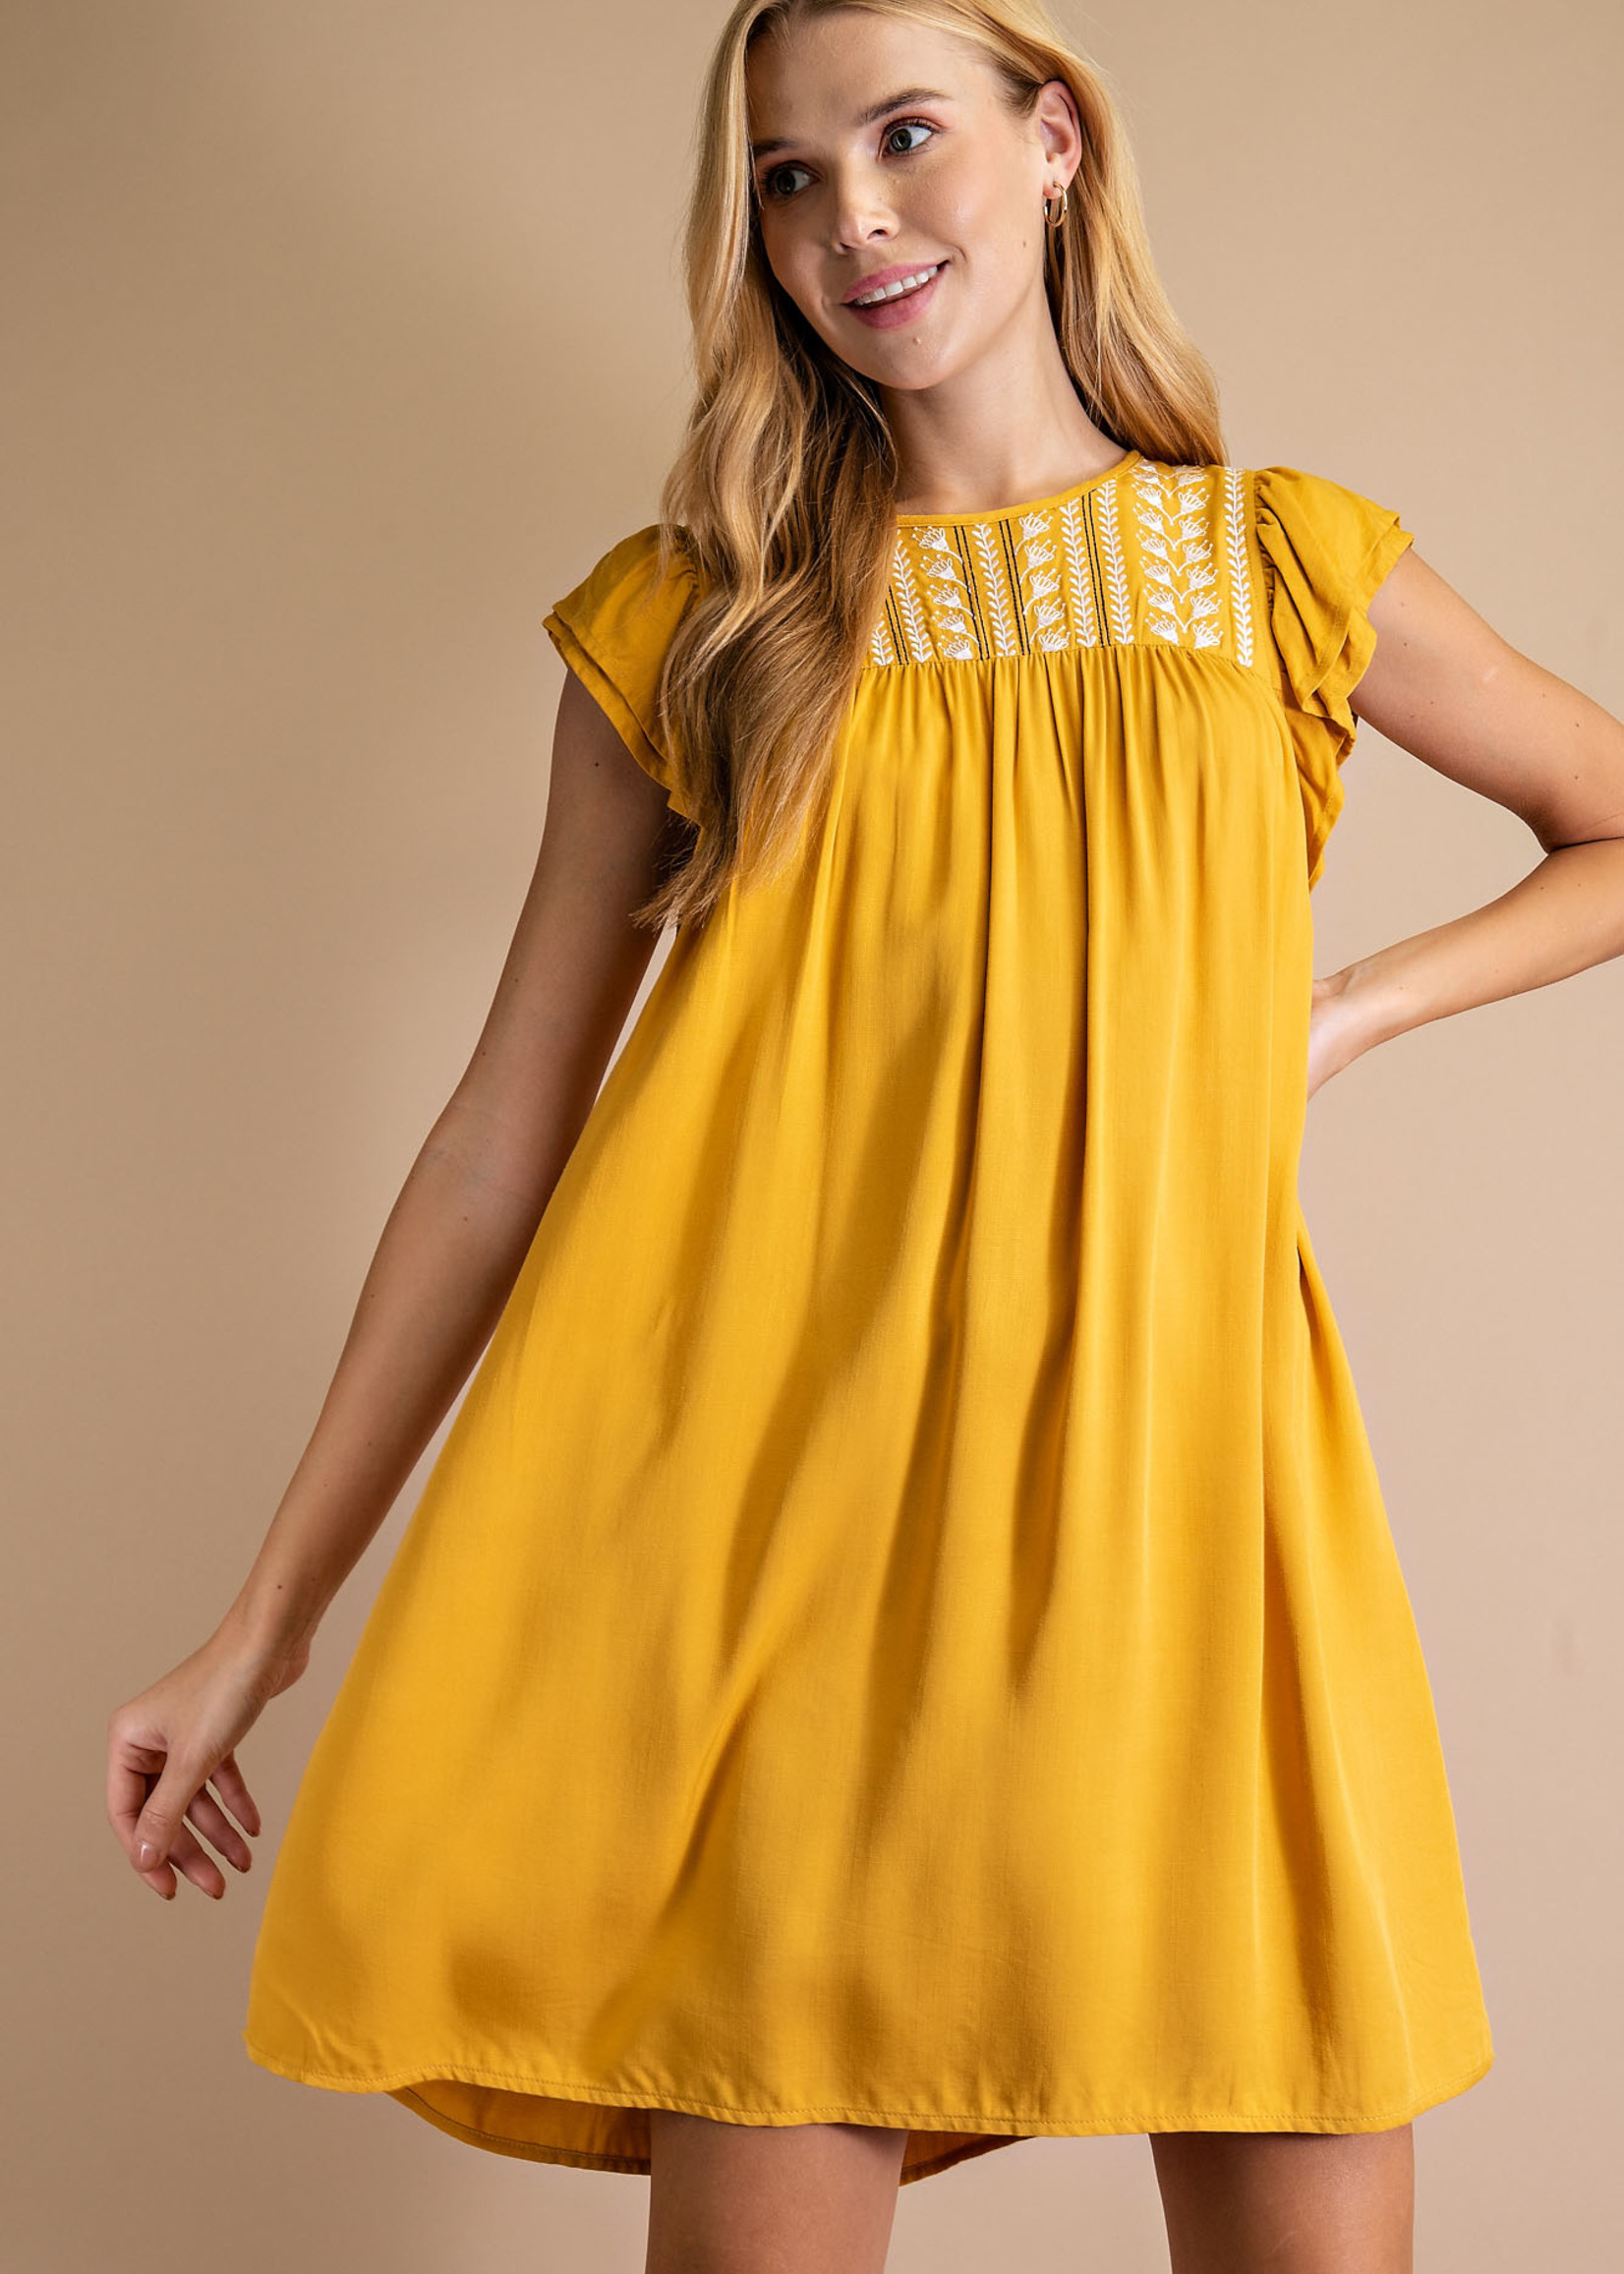 Embroidered Flutter Dress - Mustard